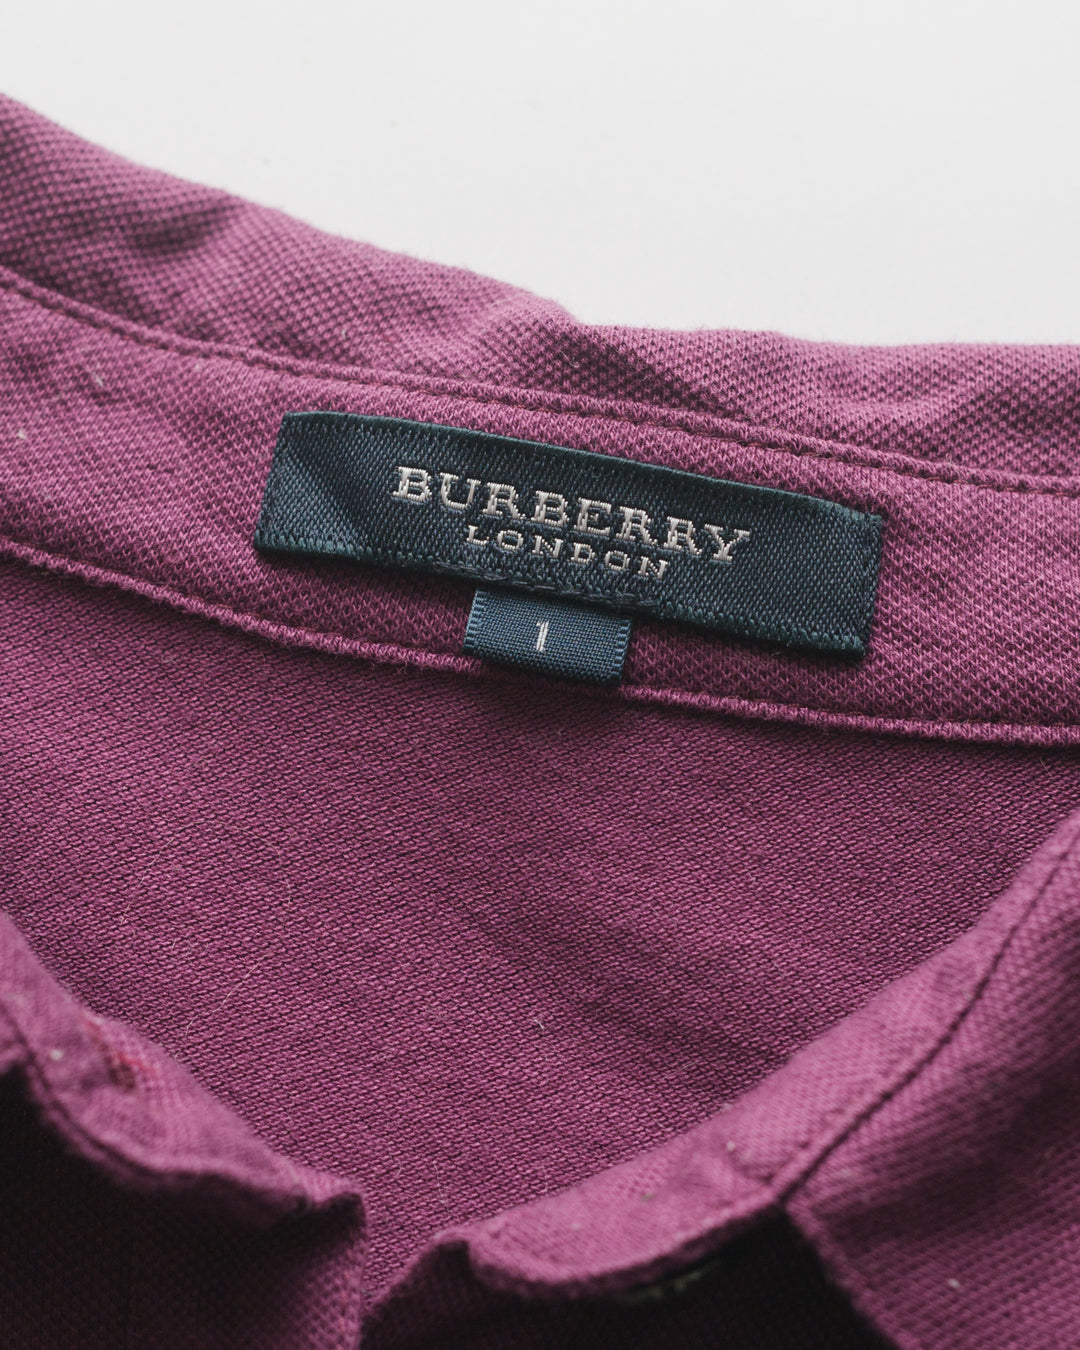 Burberry aubergine polo tshirt